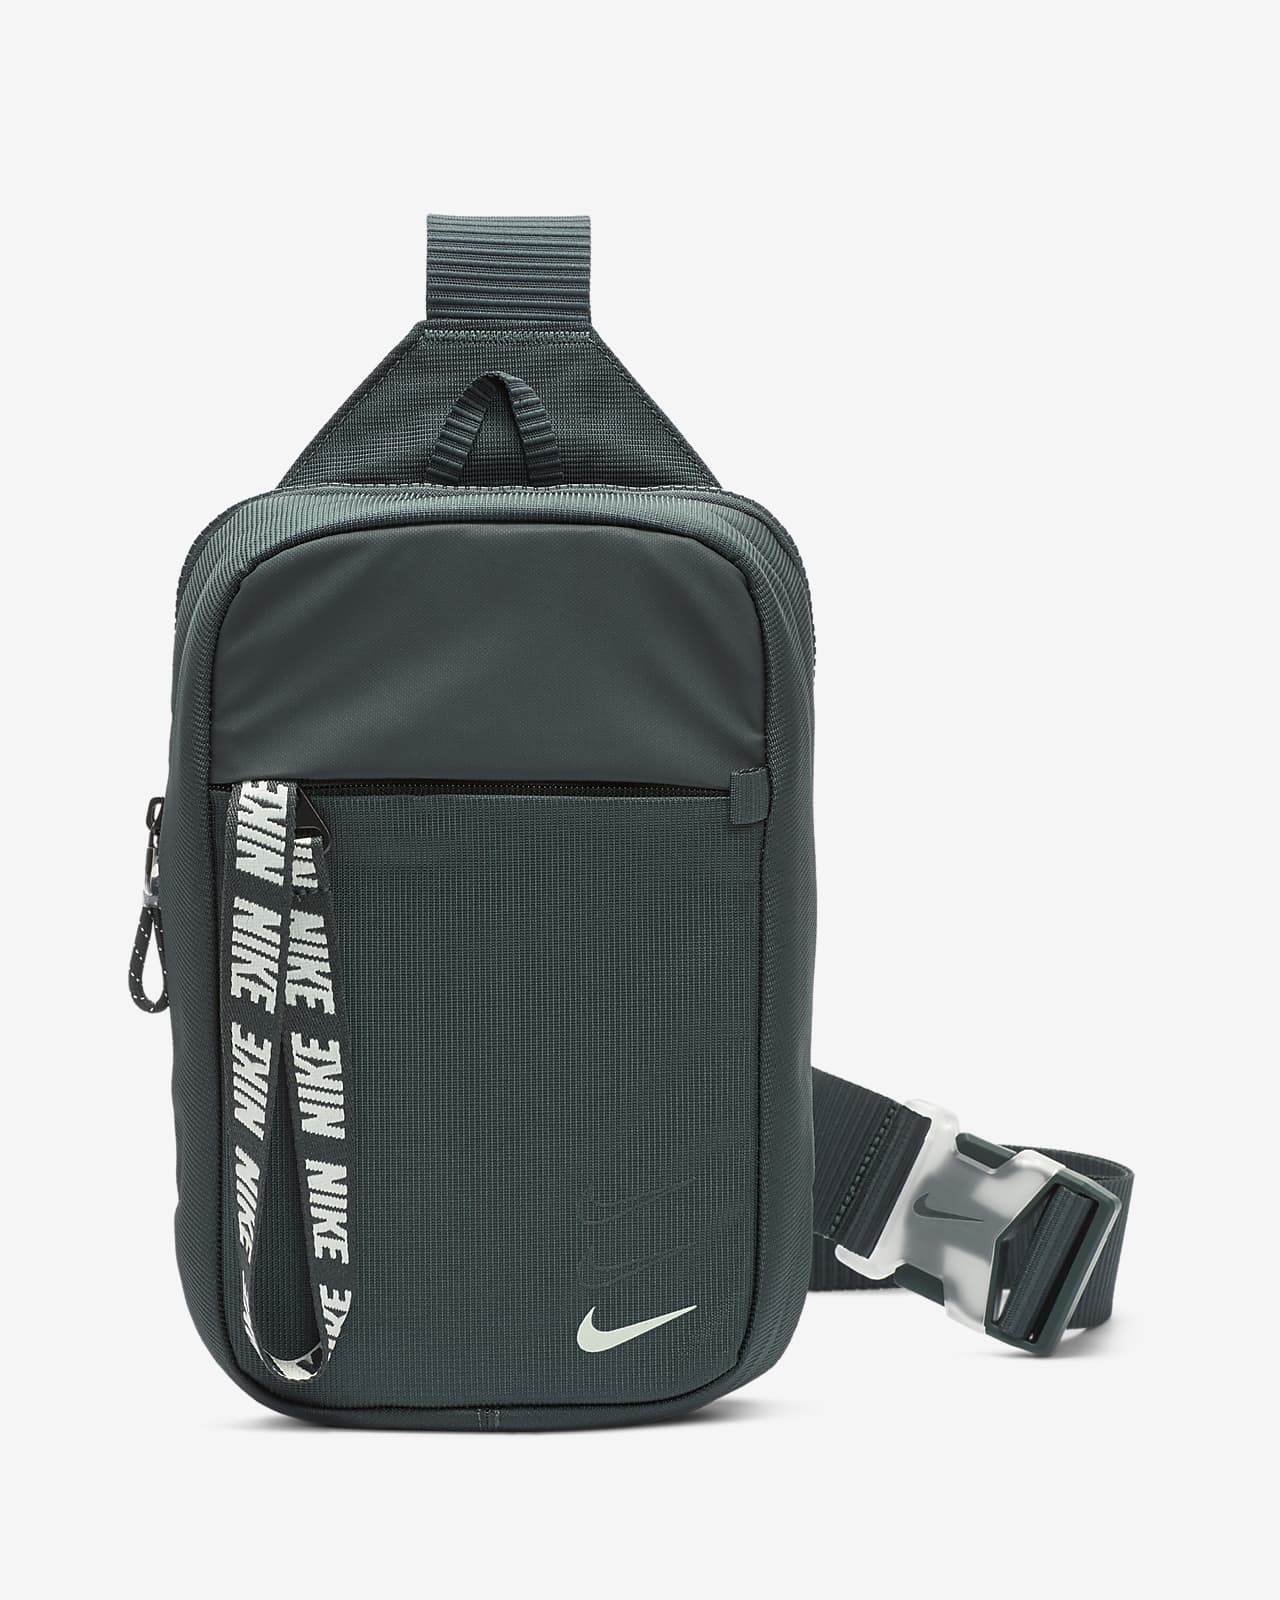 Nike Advance Crossbody Bag Hotsell, SAVE 34% 